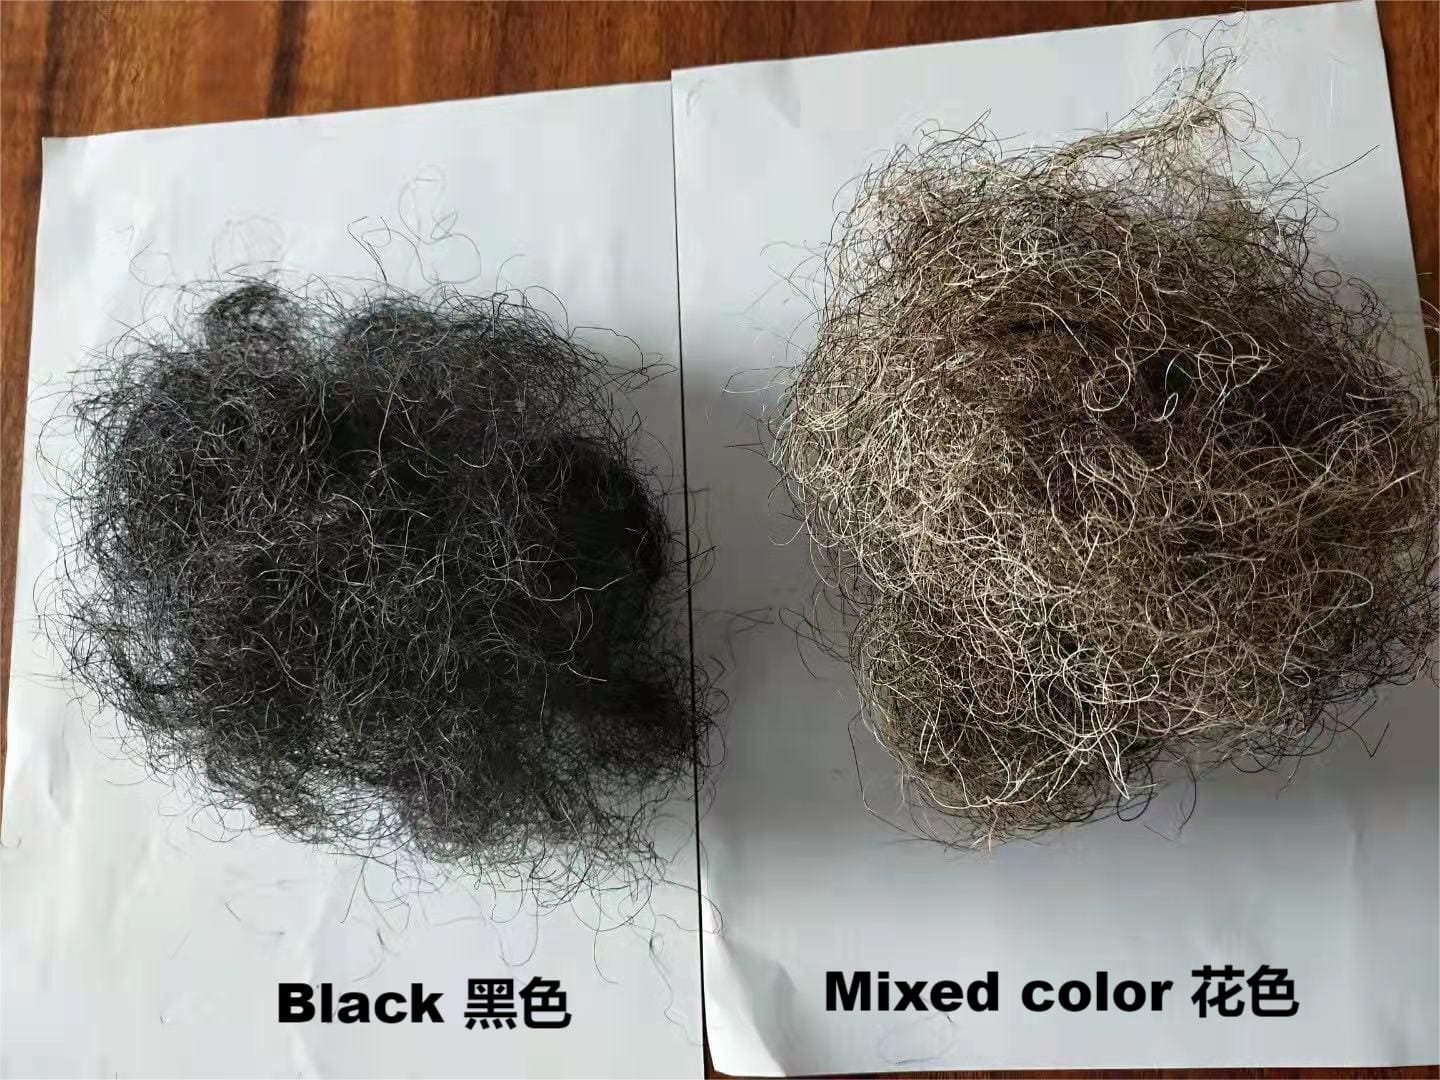 Curled Horse Hair For Padding - Yibai Horsehair Supply